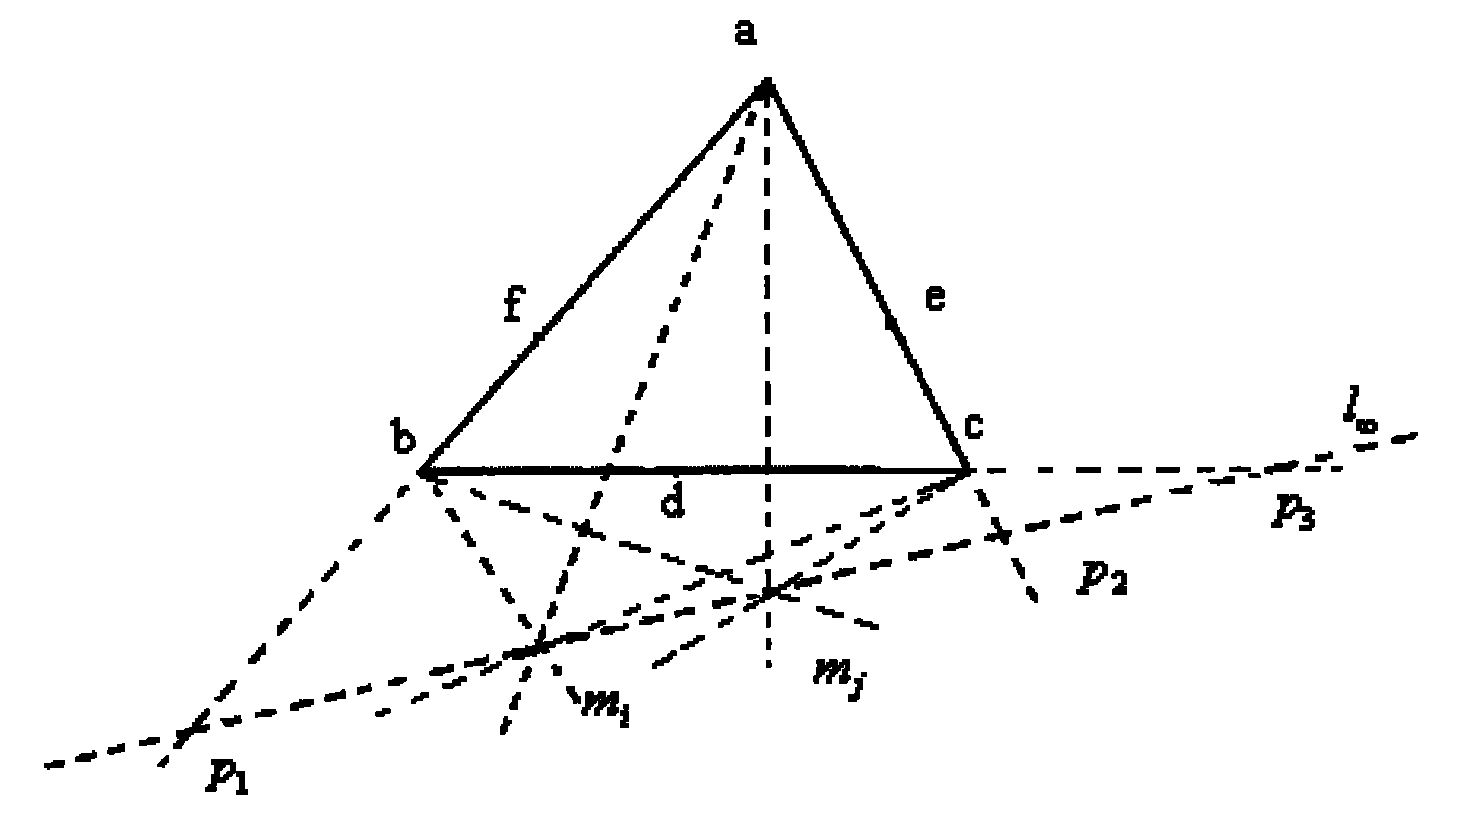 Method for calibrating parameters in camera through solving circular ring points by utilizing regular tetrahedron